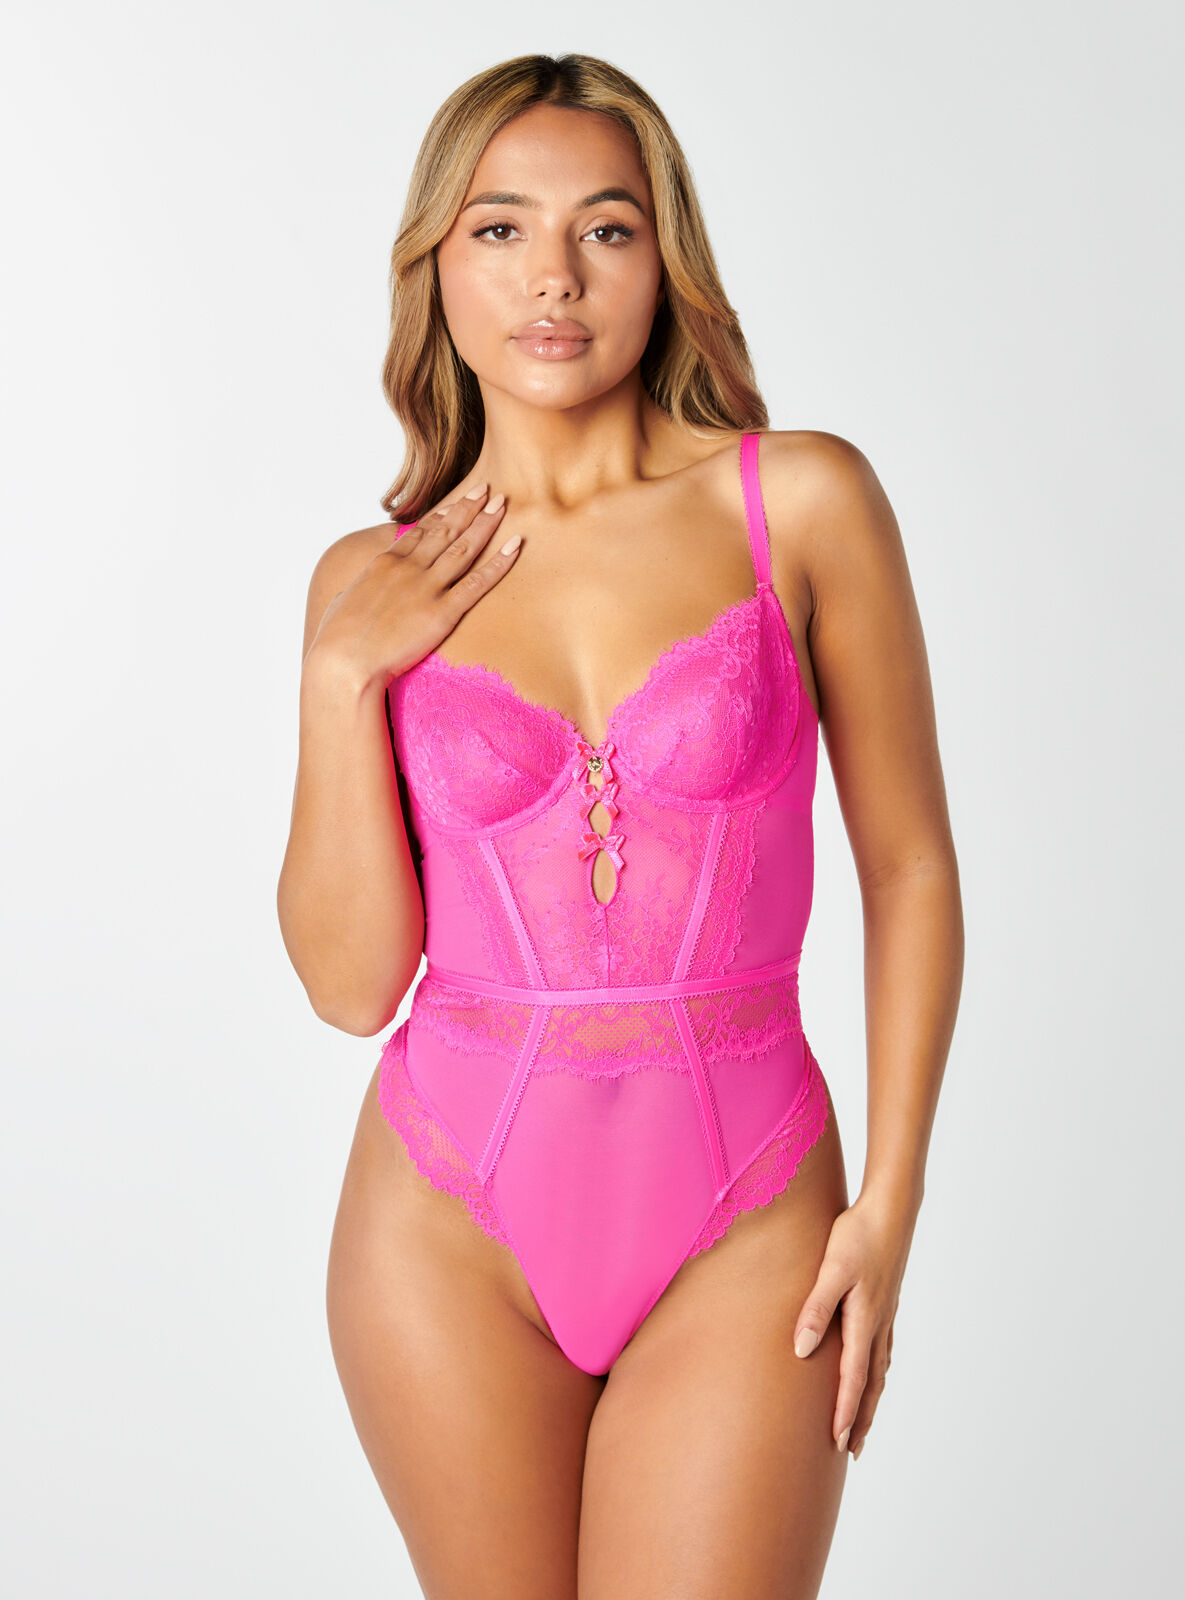 Boux Avenue Aubree body - Hot Pink - 36DD